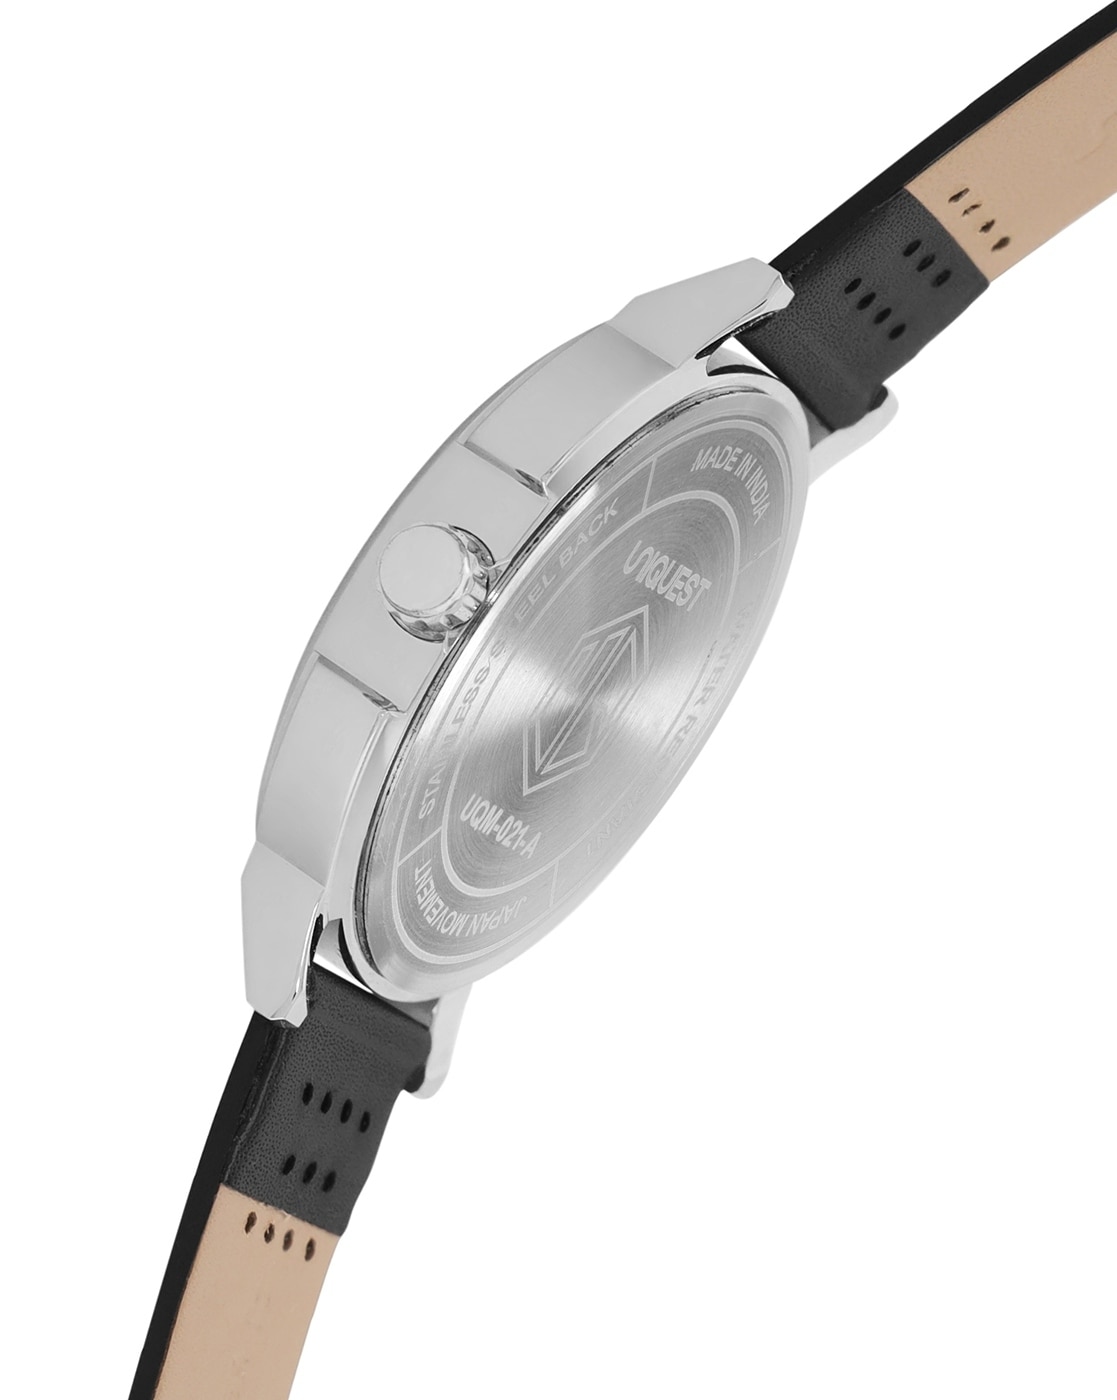 Victorinox Swiss Made Alliance 40 mm Black Dial Men's Watch